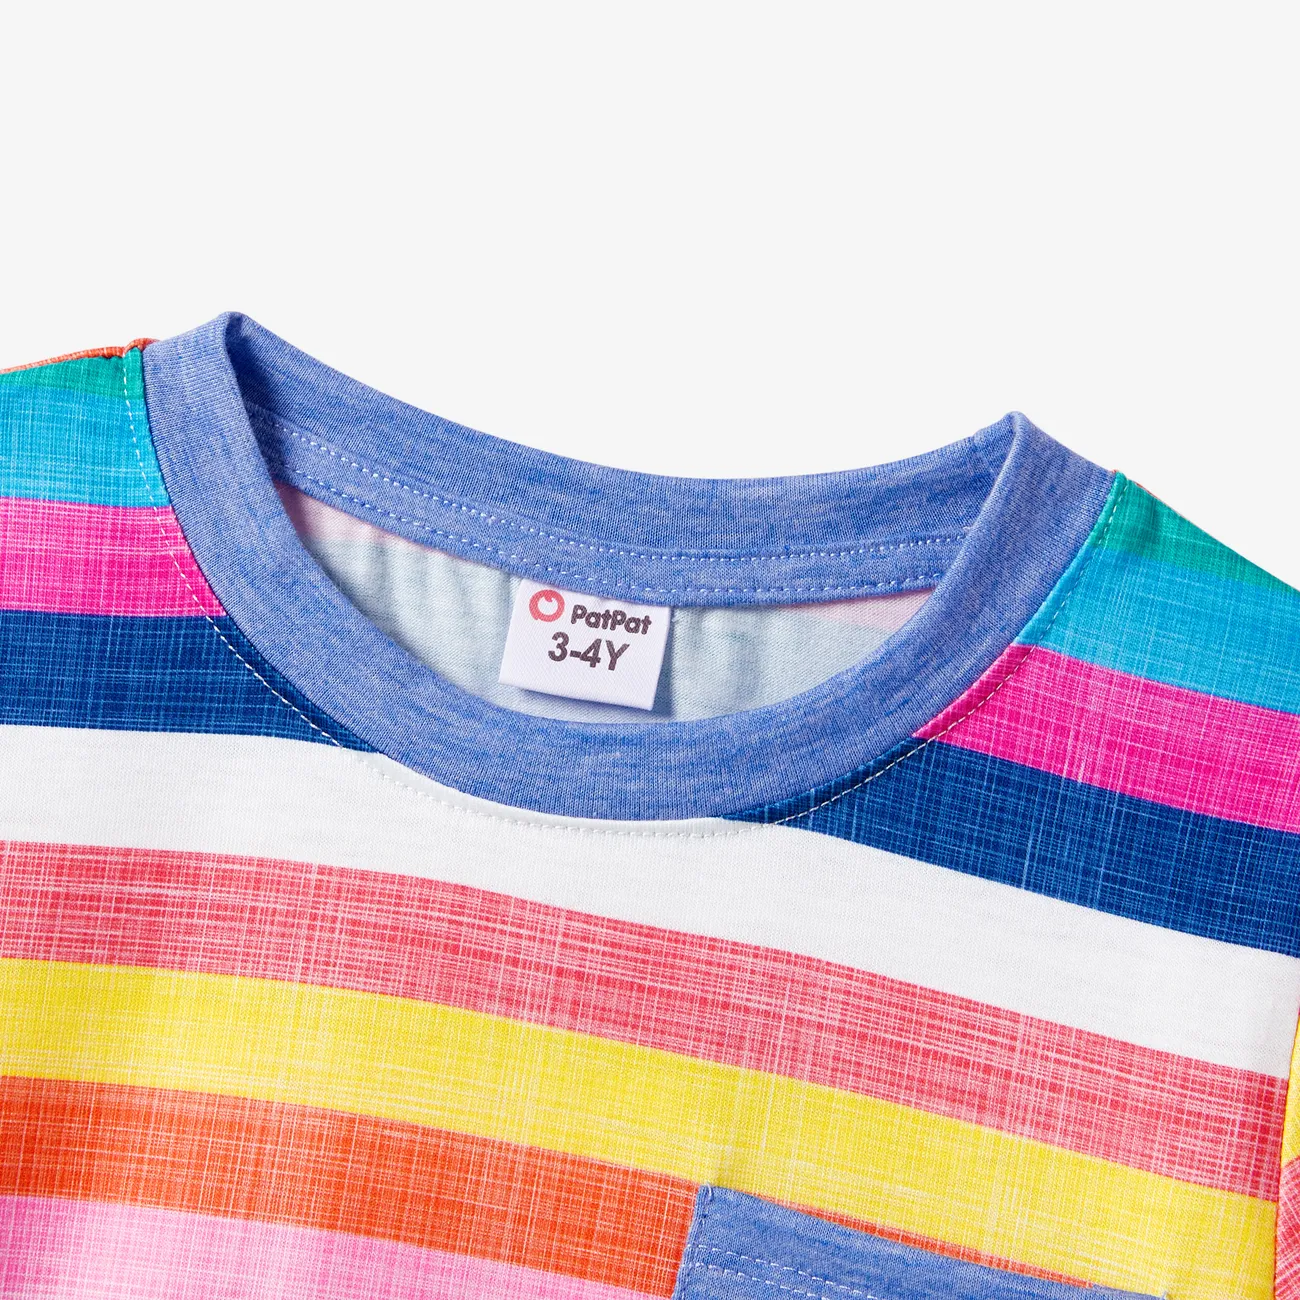 Family Matching Multi-Color Stripe T-shirt and Ruffle Hem Button Strap Dress Sets COLOREDSTRIPES big image 1